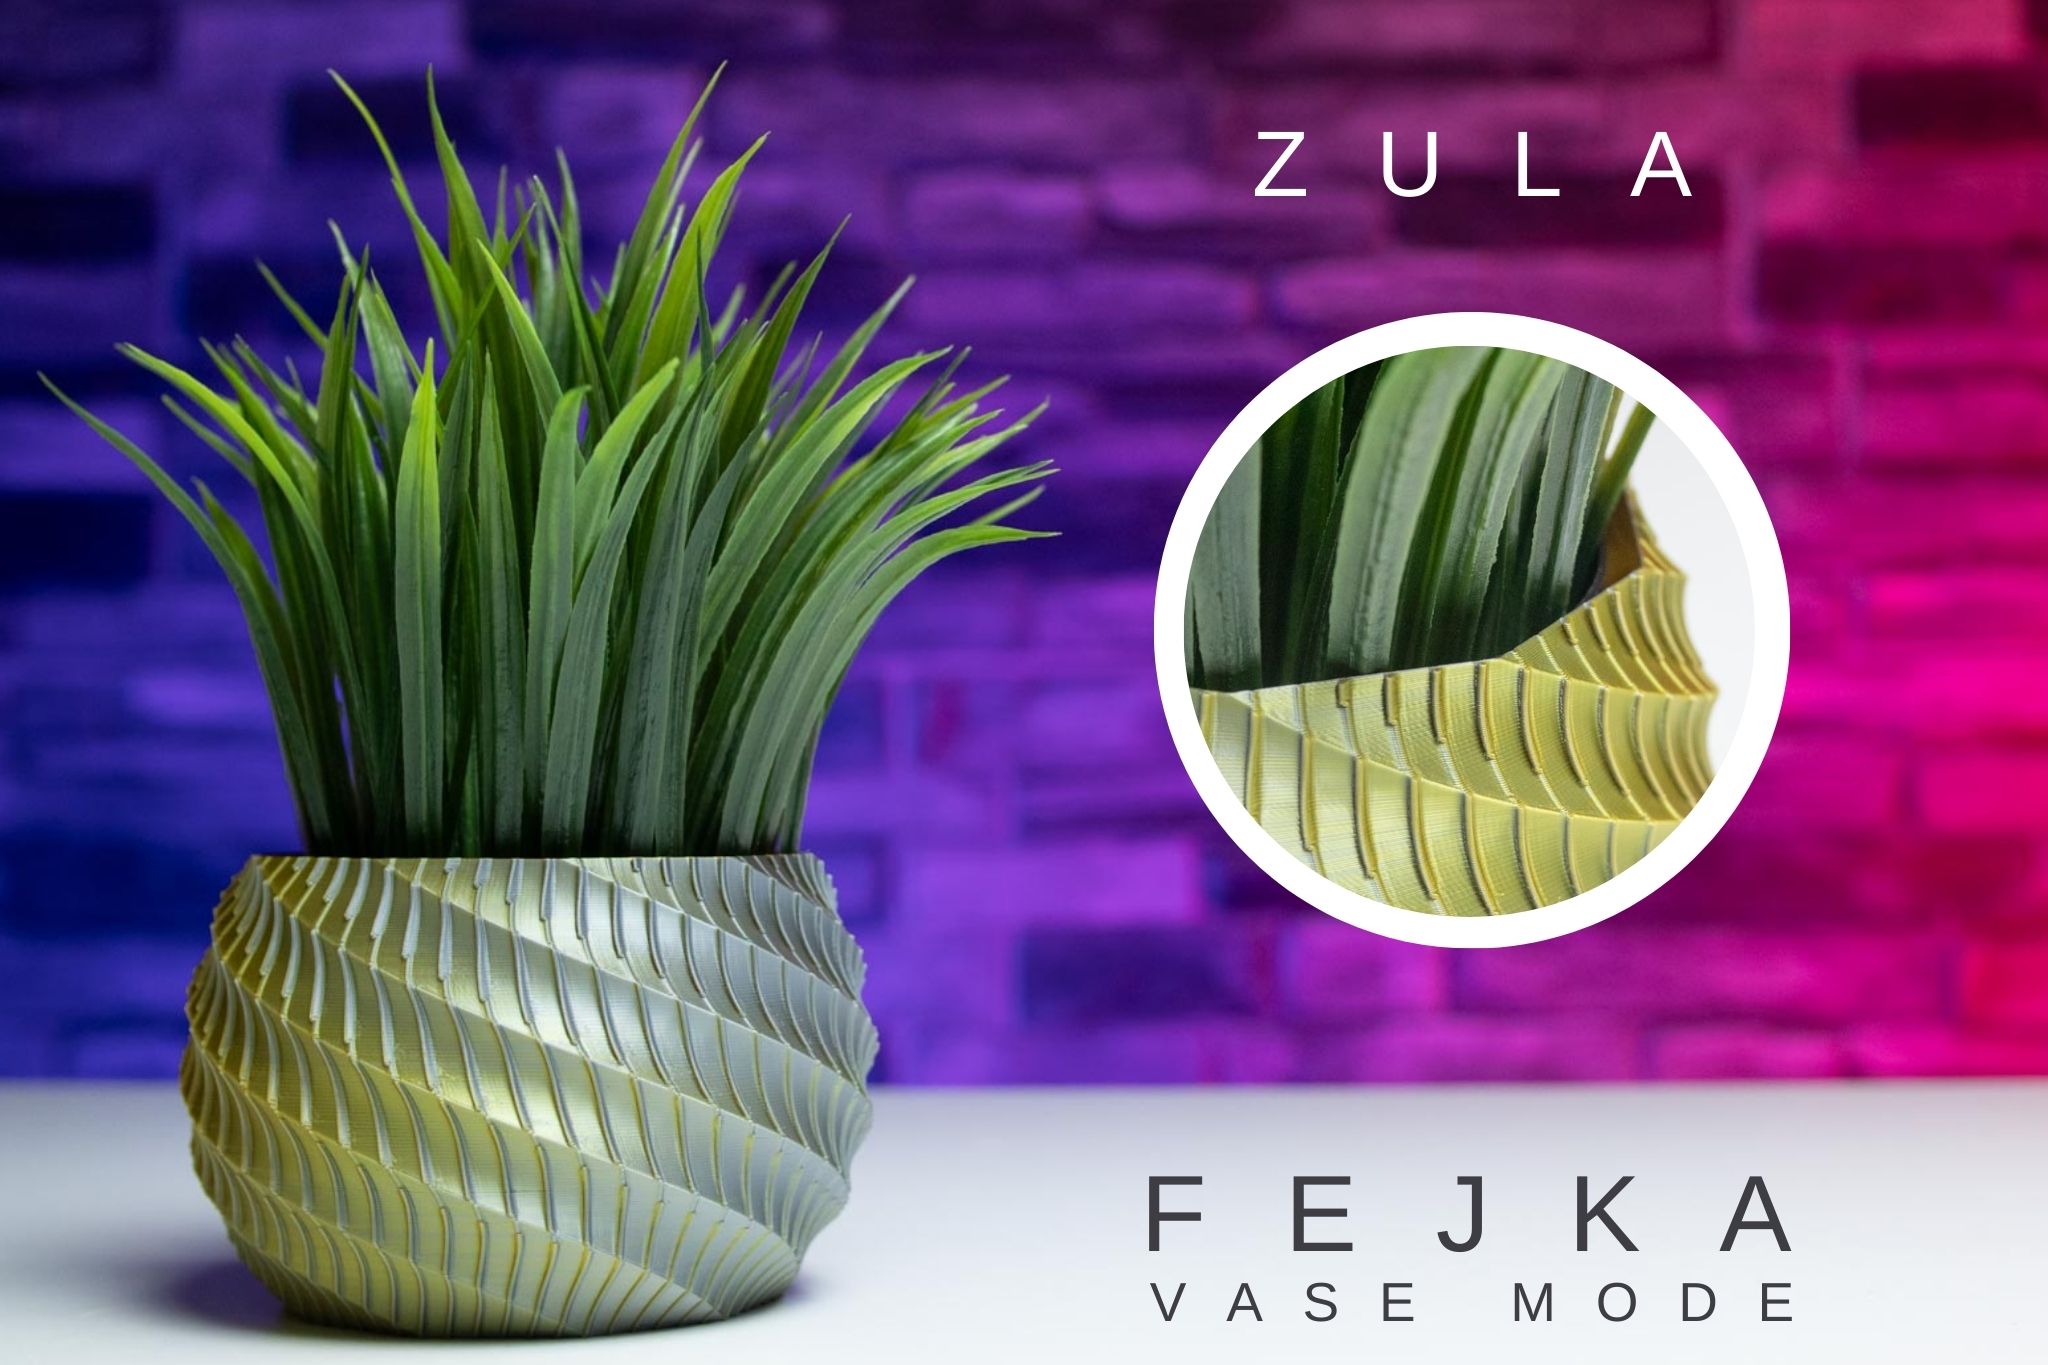 3D Printed Planter and Pot for Ikea Fejka - Vase ZULA